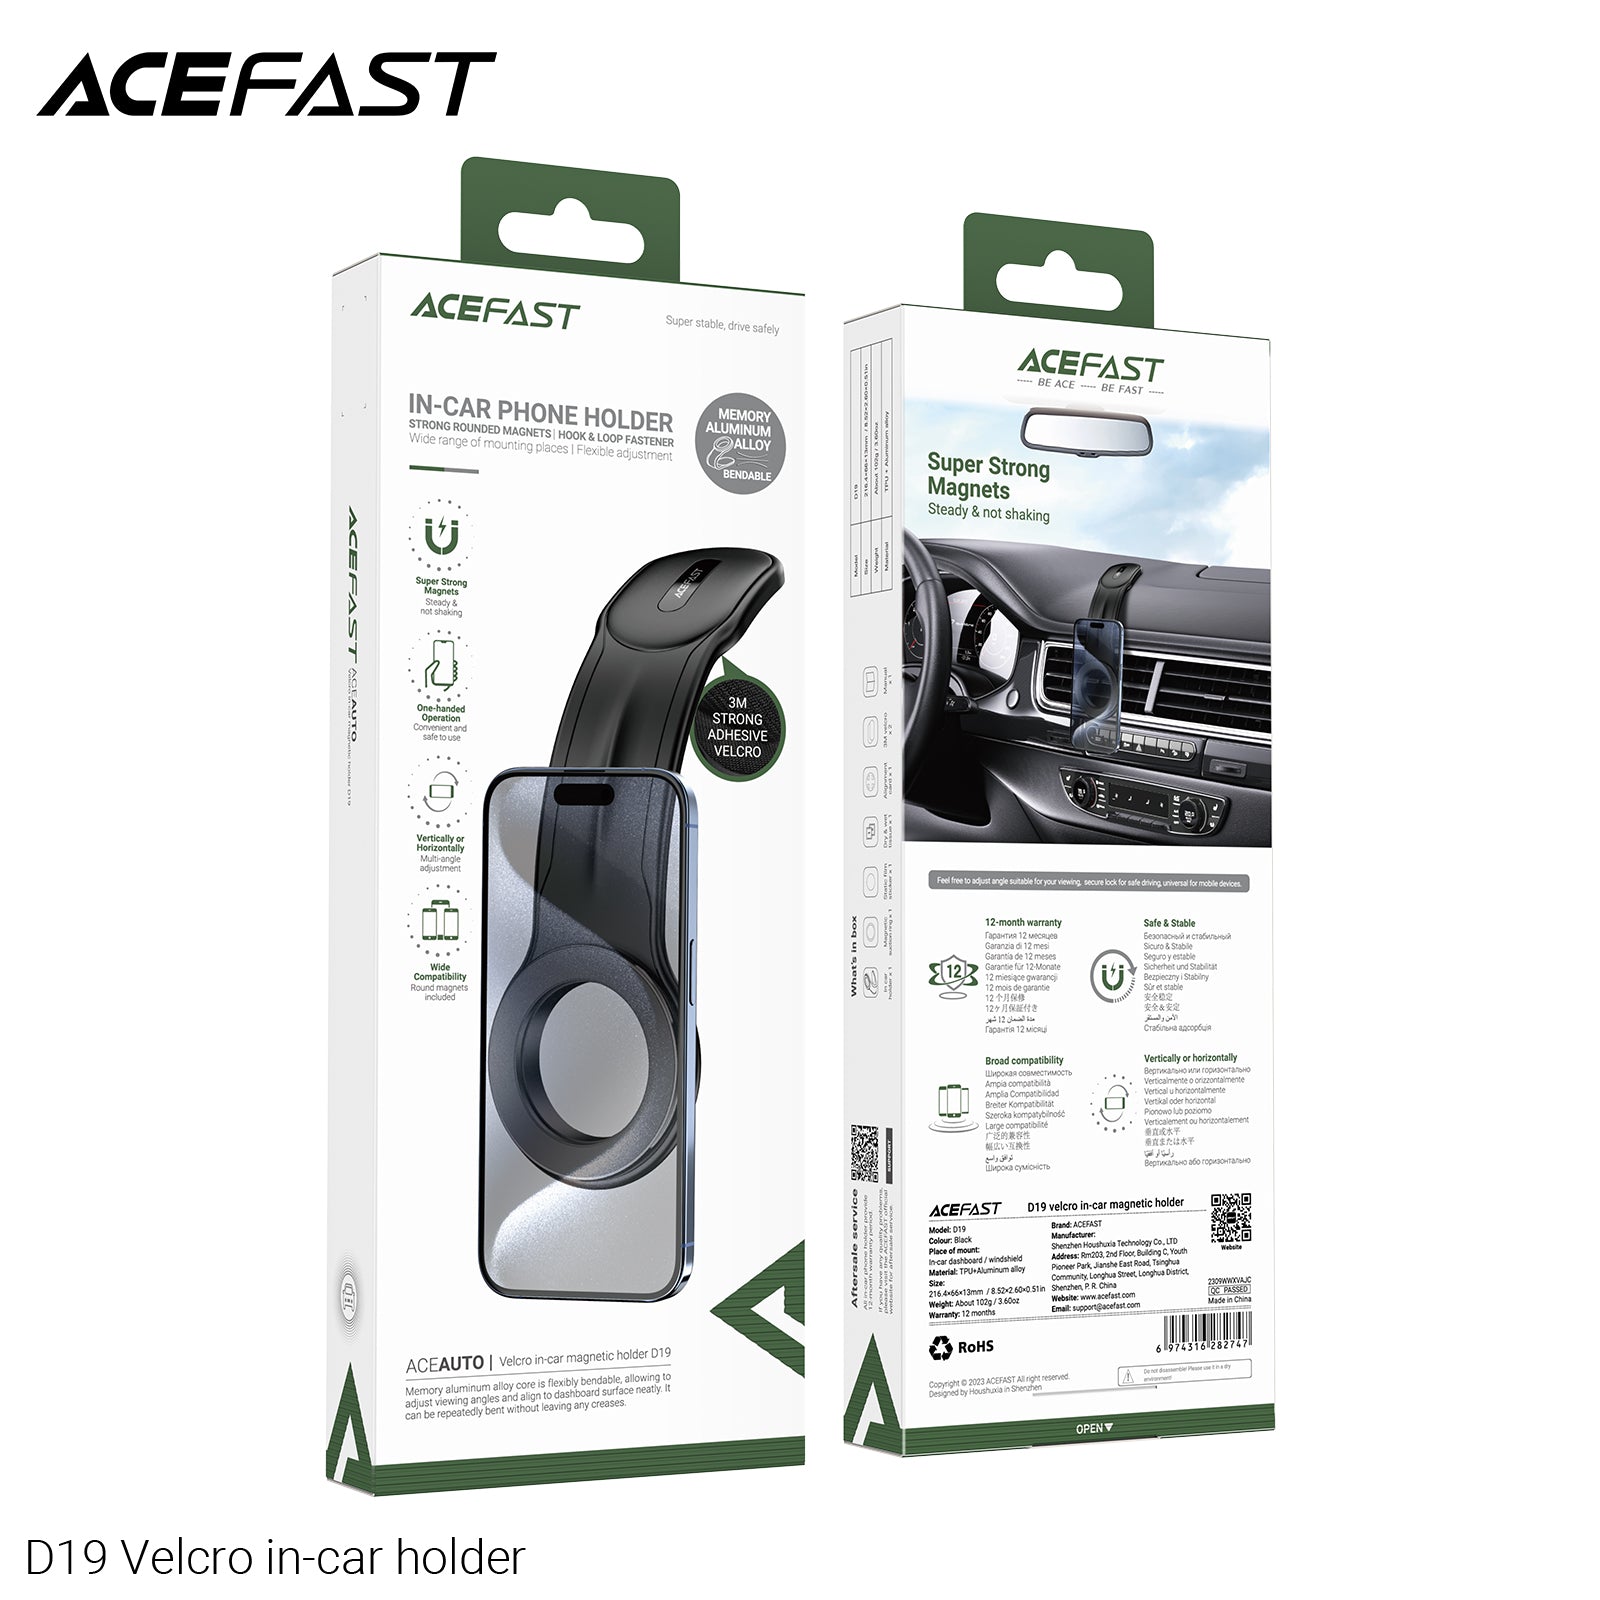 ACEFAST D19 Velcro in-car holder